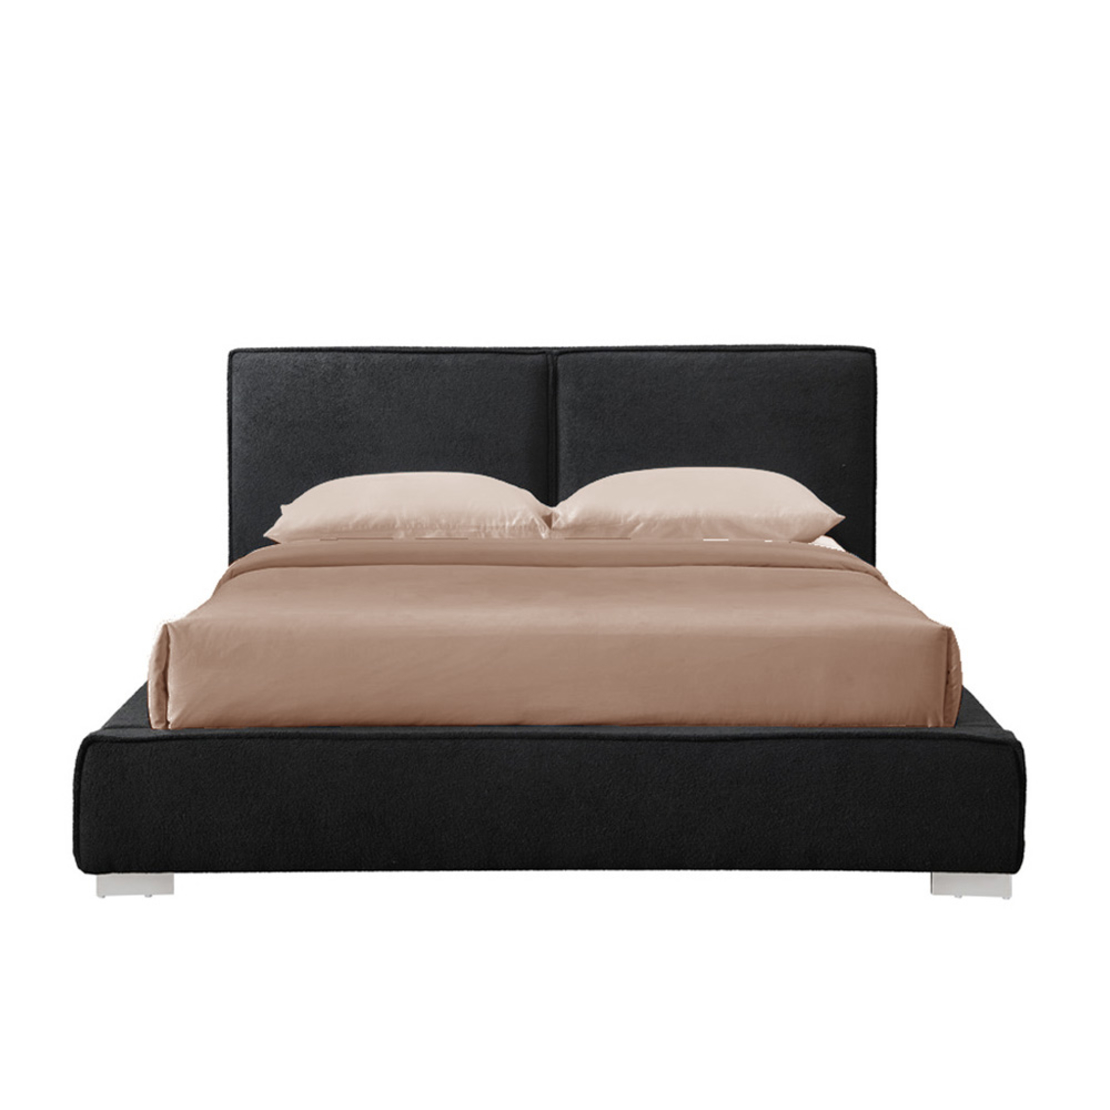 URBAN BED (FOR MATTRESS 160x200cm) FABRIC BLACK E1